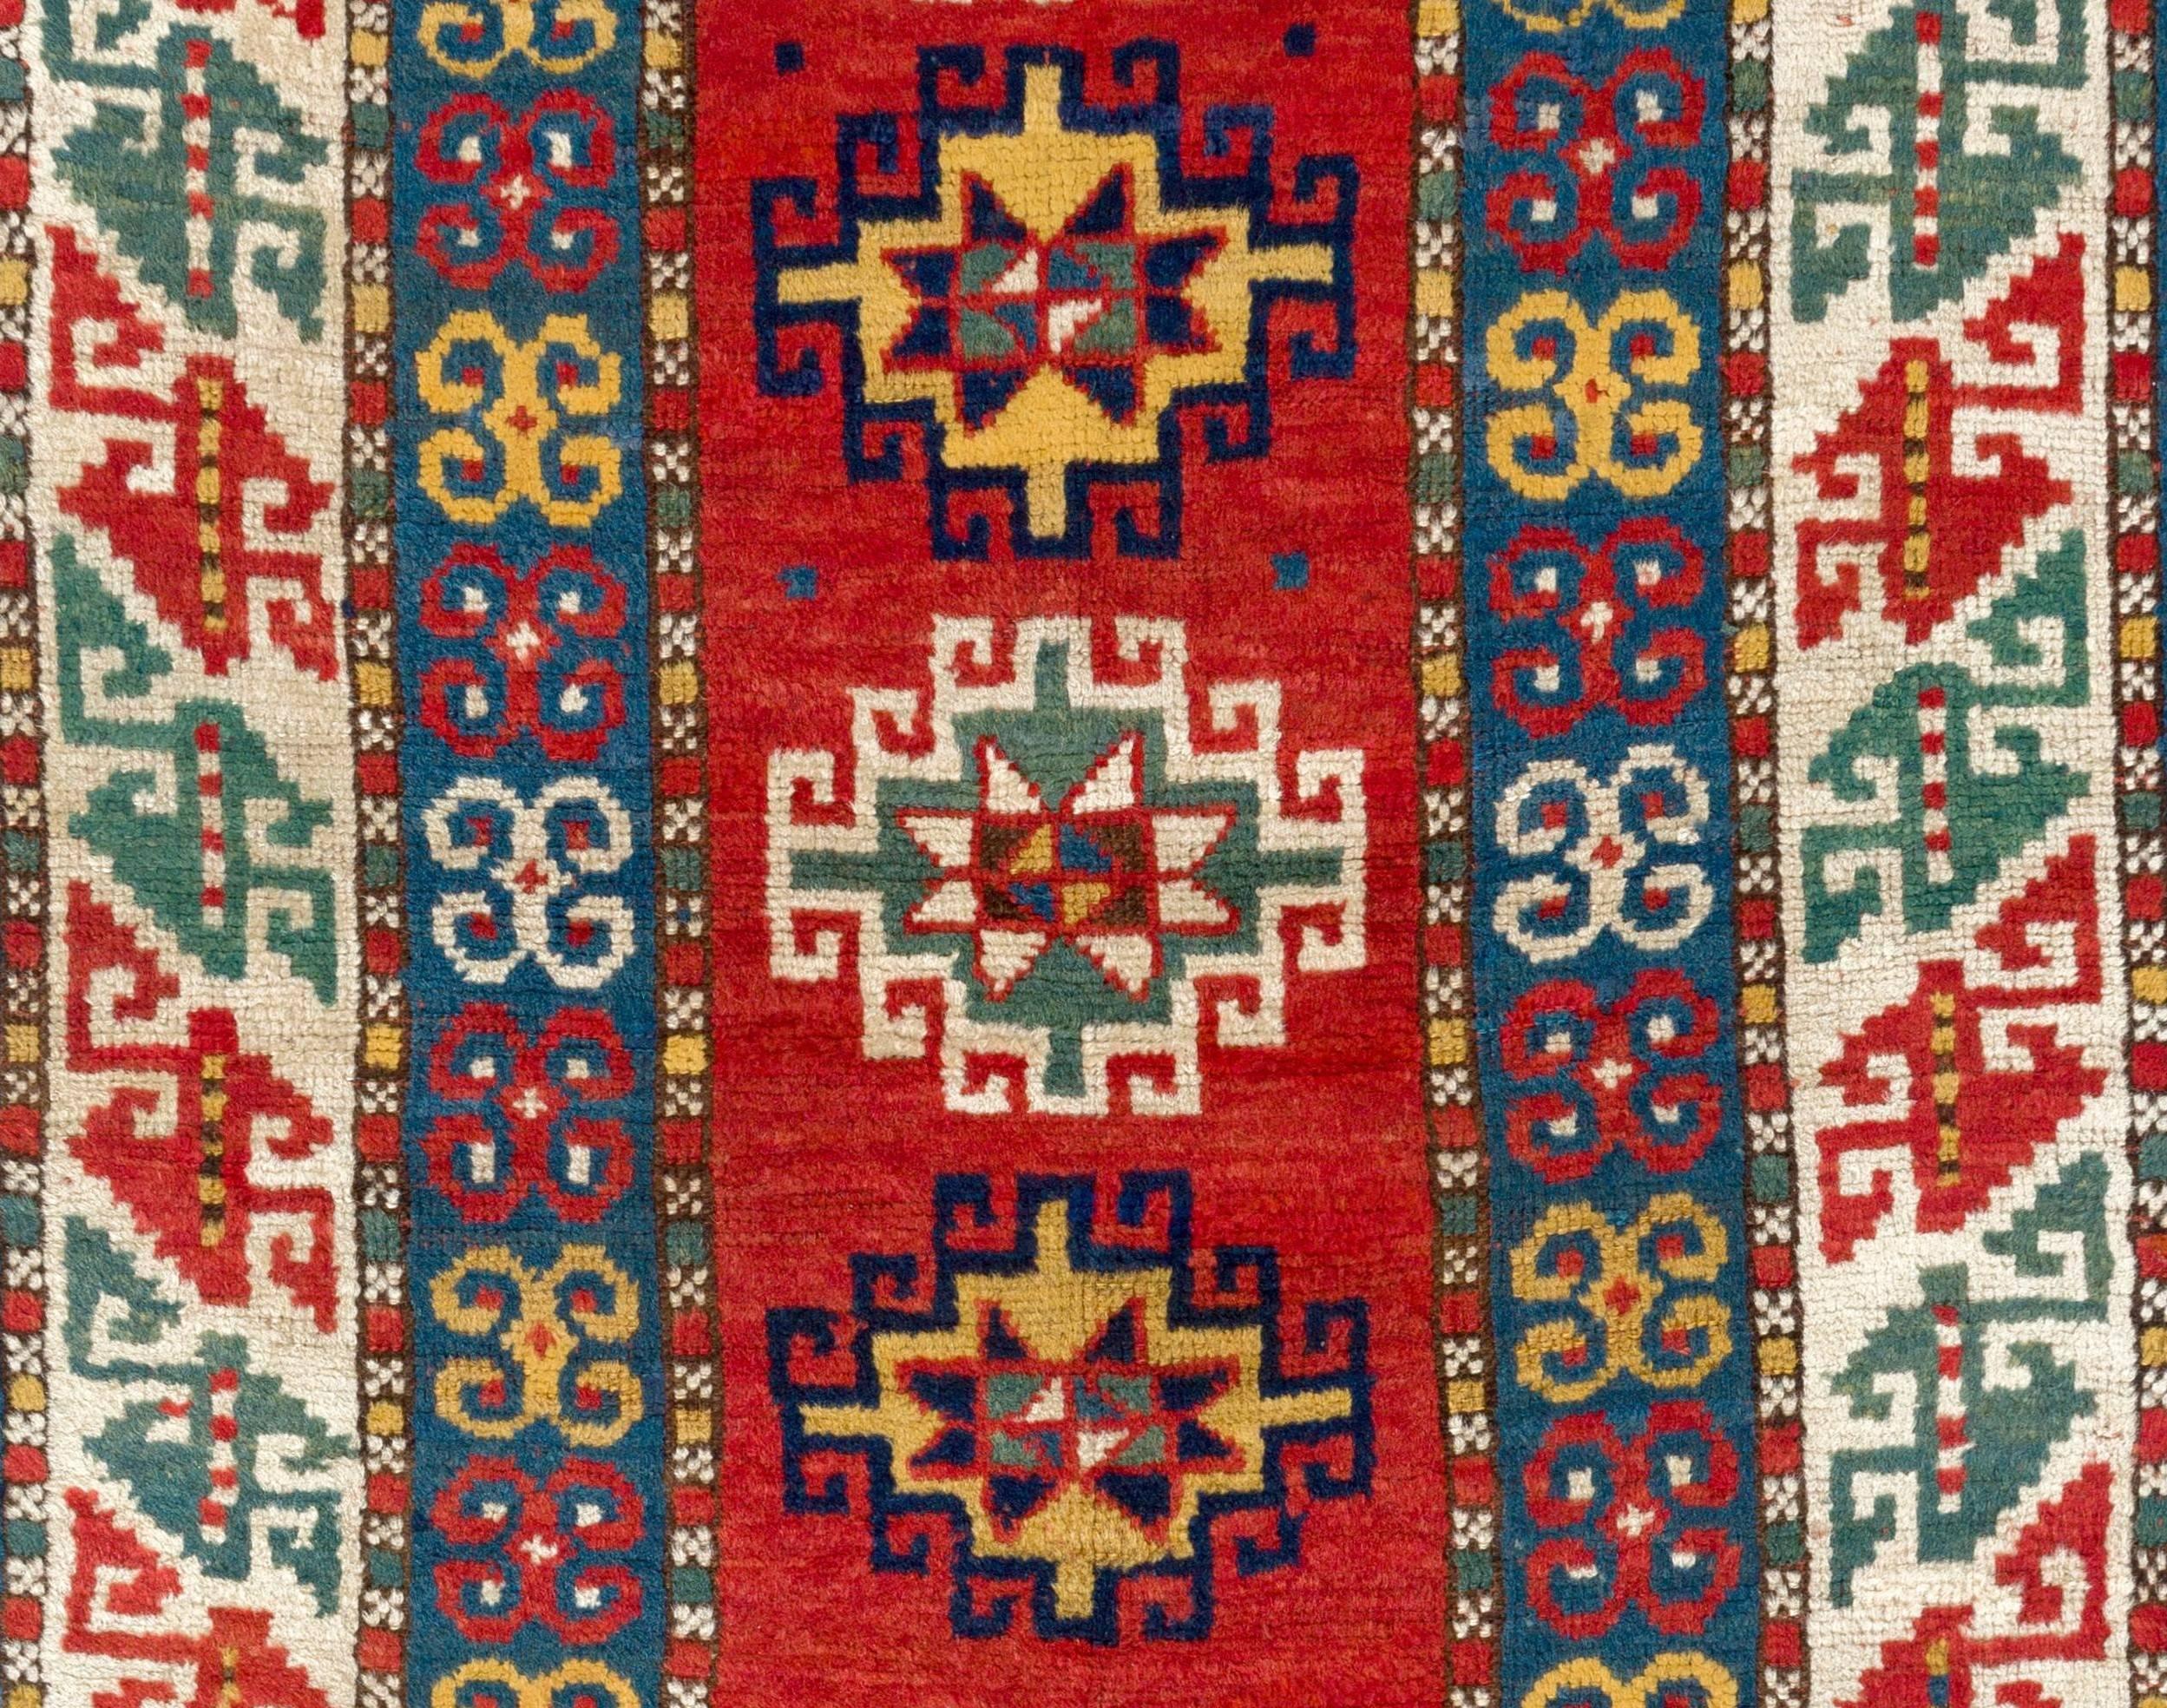 Vibrant antique Caucasian Kazak rug
Excellent original condition
All natural dyes,
circa 1880.